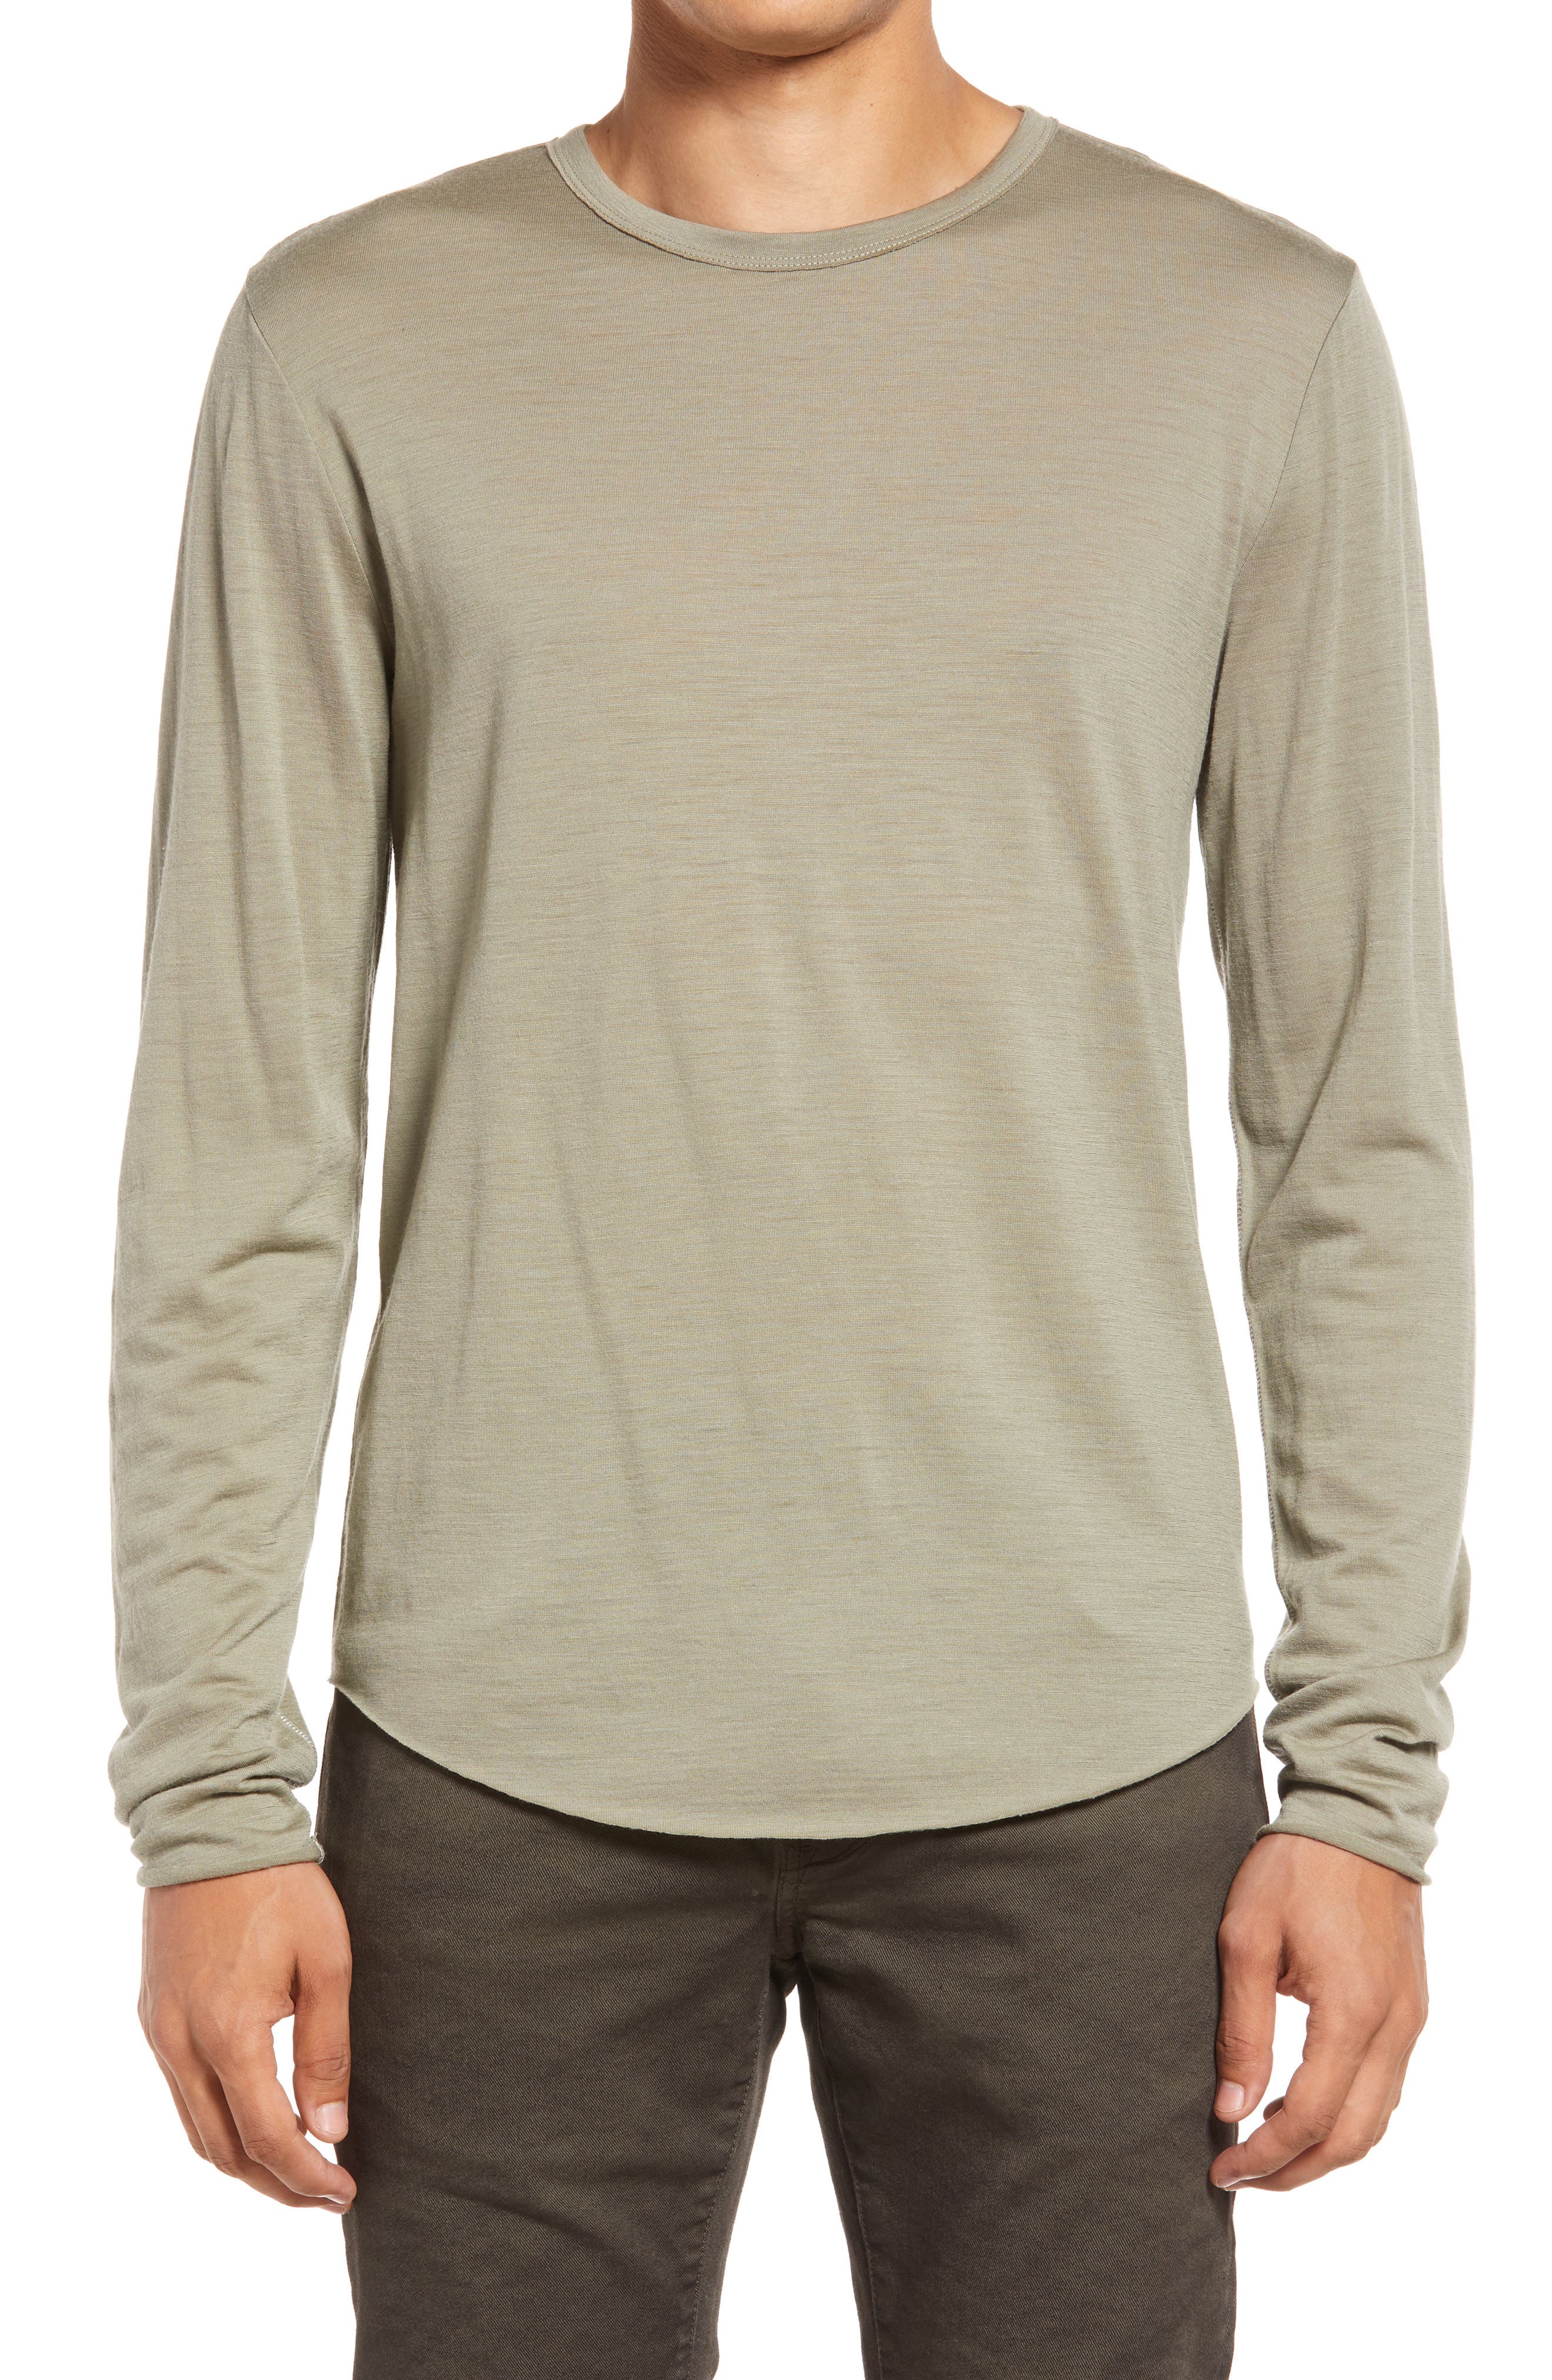 rag & bone Heath Long Sleeve Merino Wool T-Shirt in Sage at Nordstrom, Size X-Large